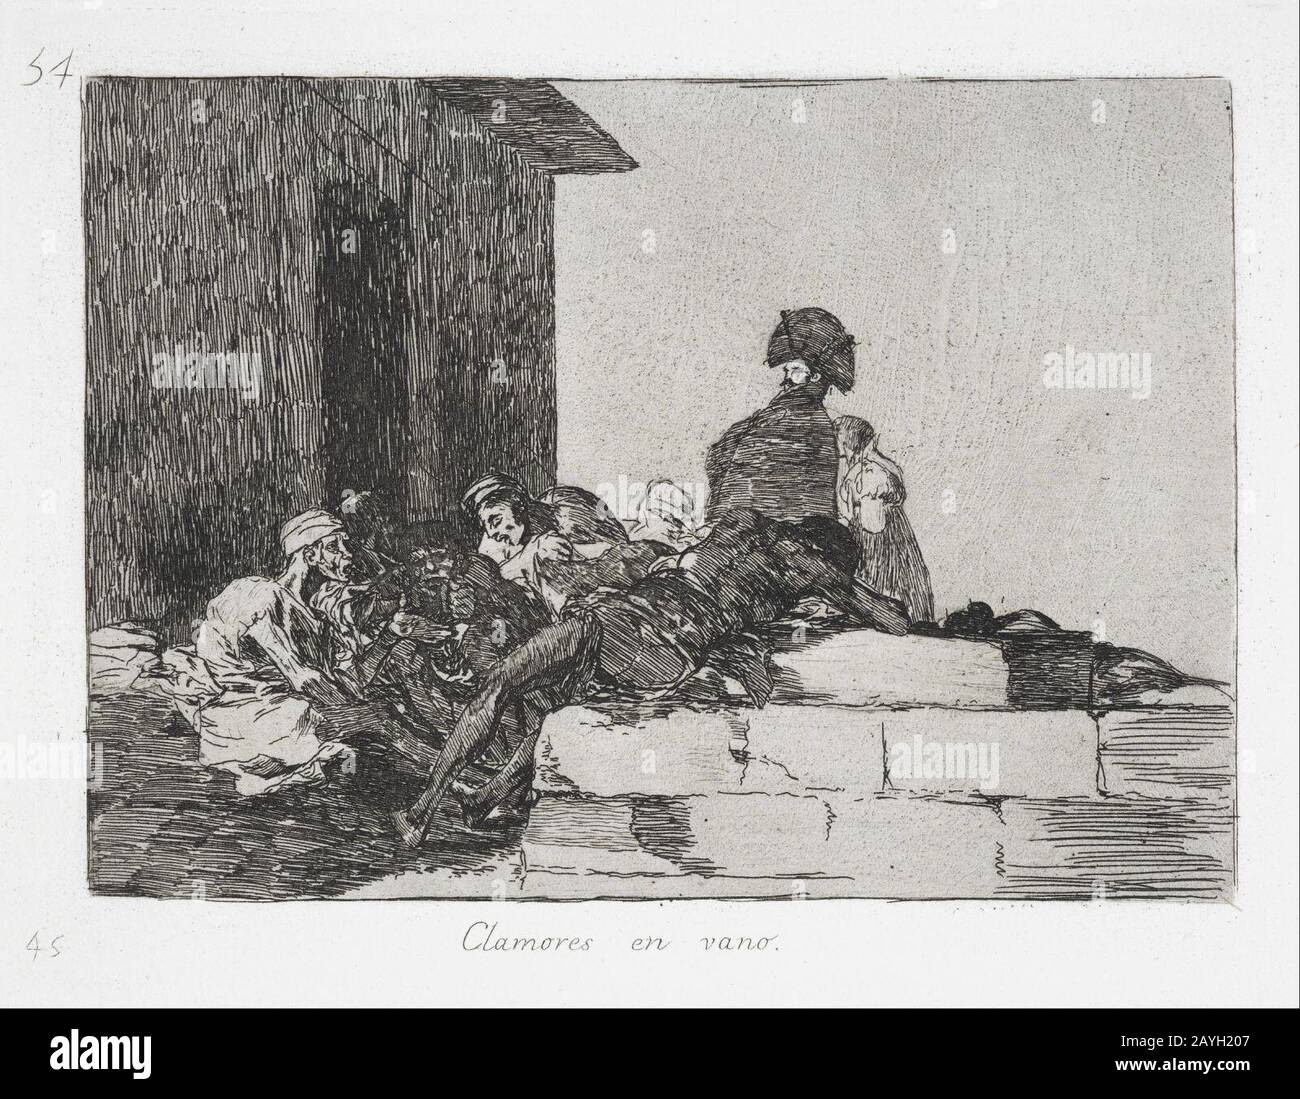 Francisco de Goya - Vain laments (Clamores en vano) from the series The Disasters of War (Los Desastres de la Guerra) Stock Photo